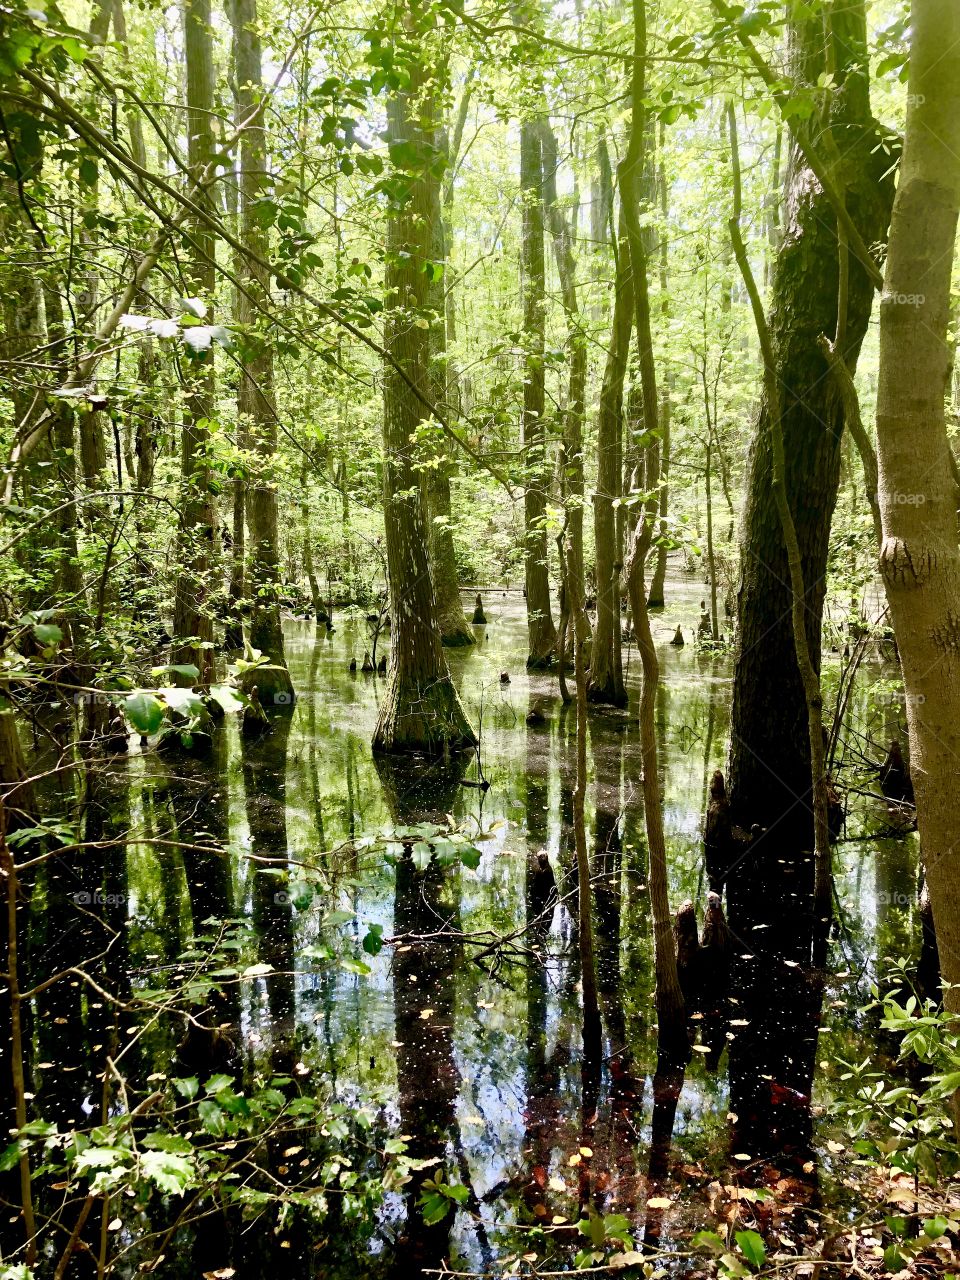 Swamp land